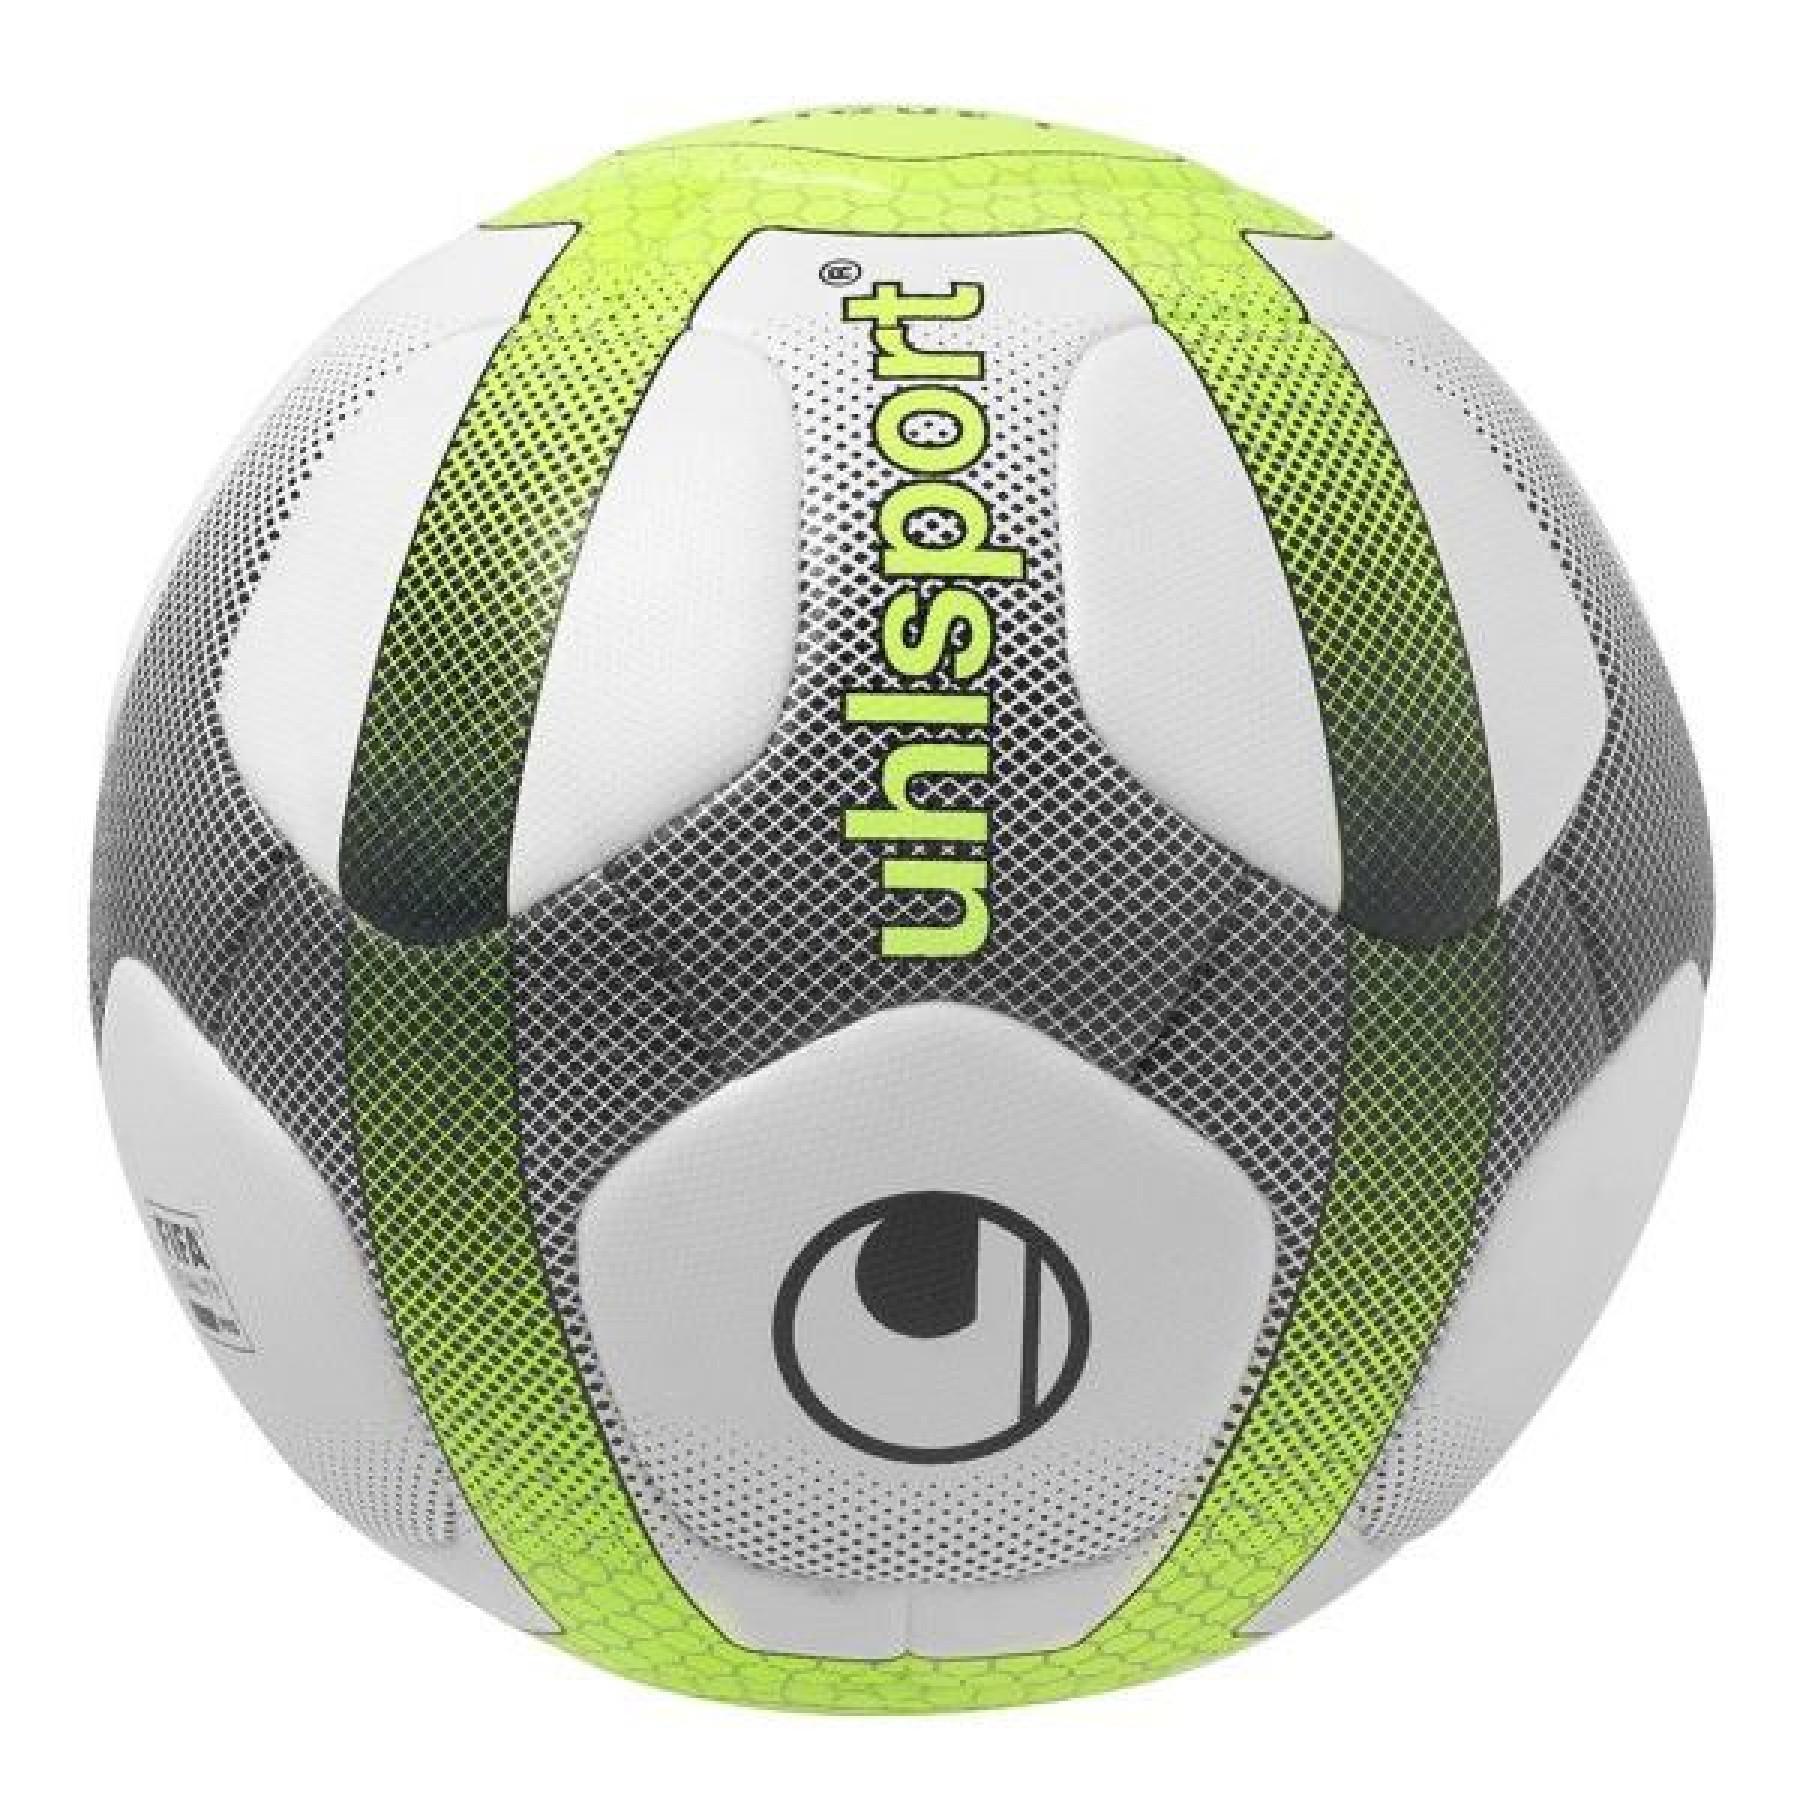 Ballon Uhlsport Ligue 1 Competition Elysia